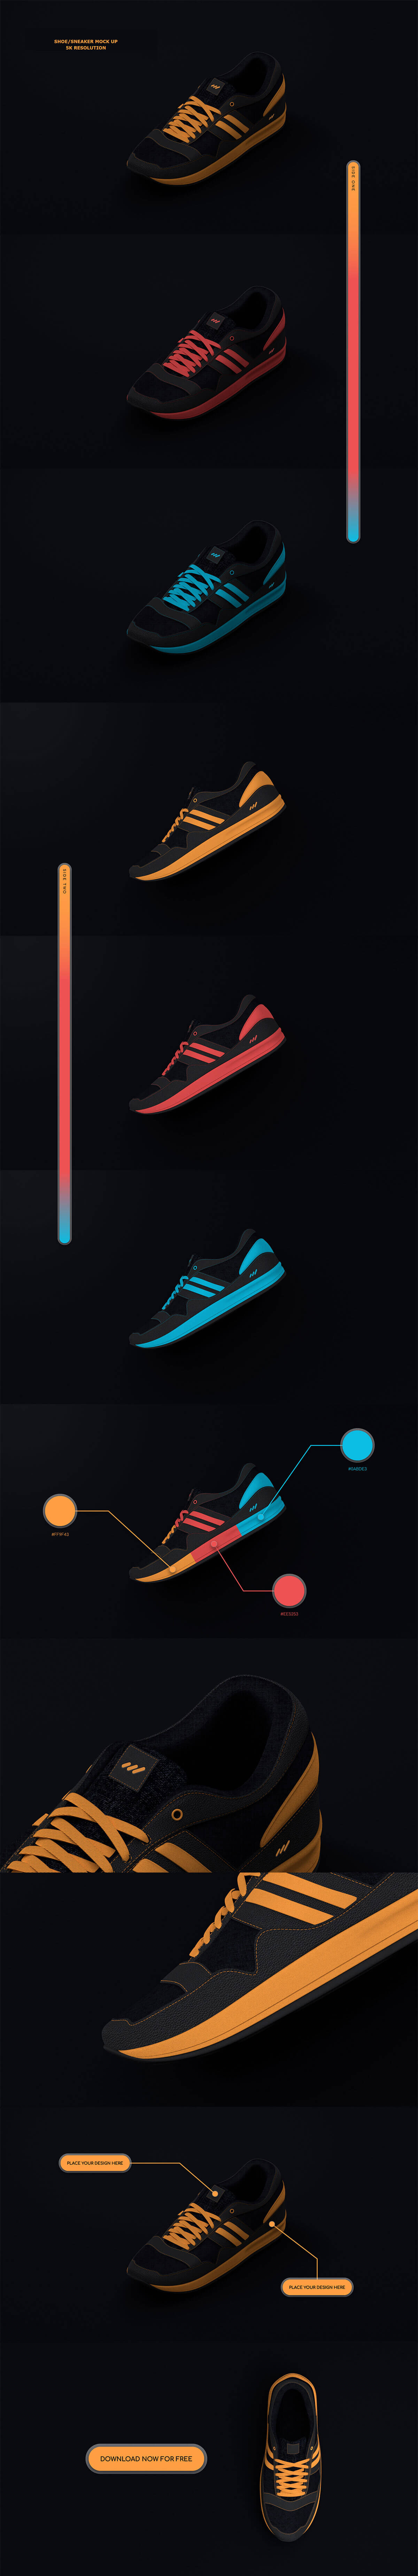 Download Shoe Sneakers PSD Mockup Free Download | DesignHooks